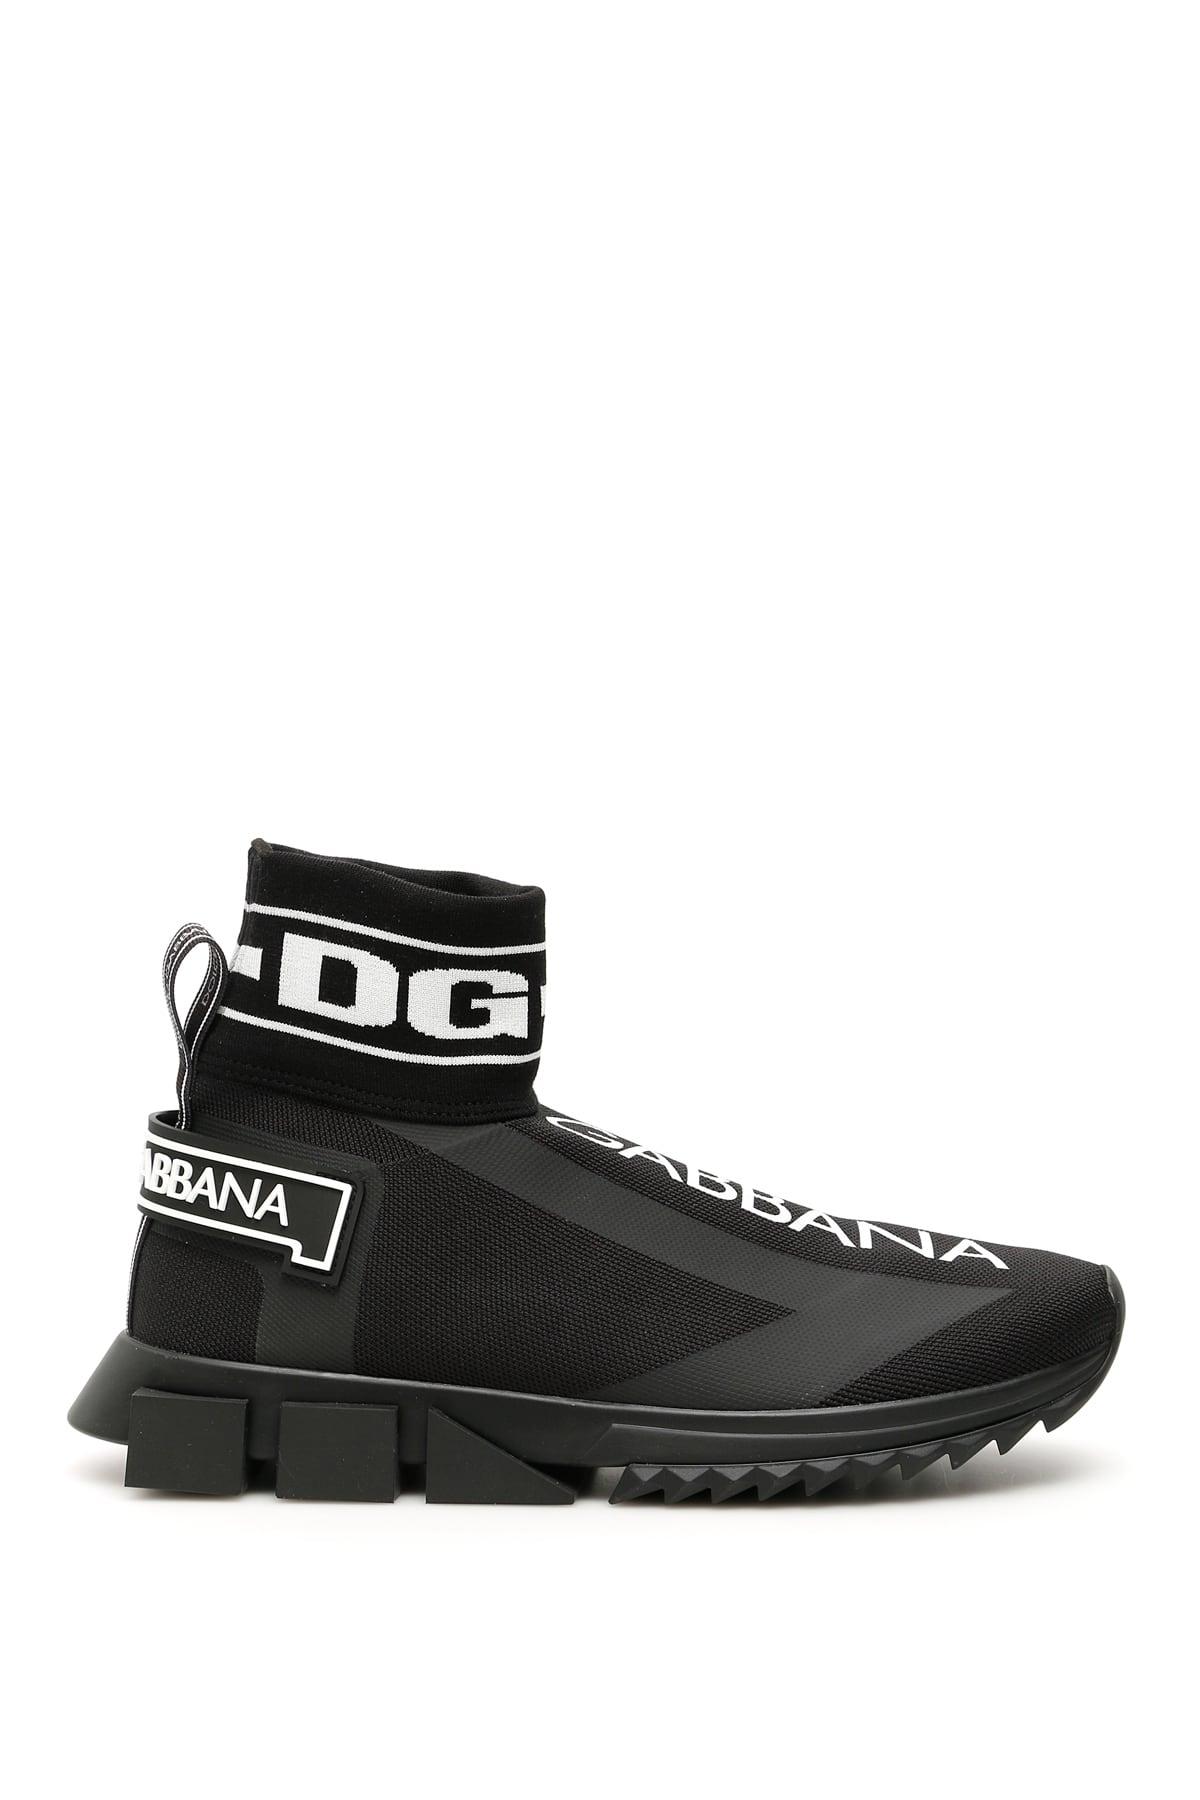 Dolce & Gabbana Rubber Sorrento Running Sneakers in Black,White (Black ...